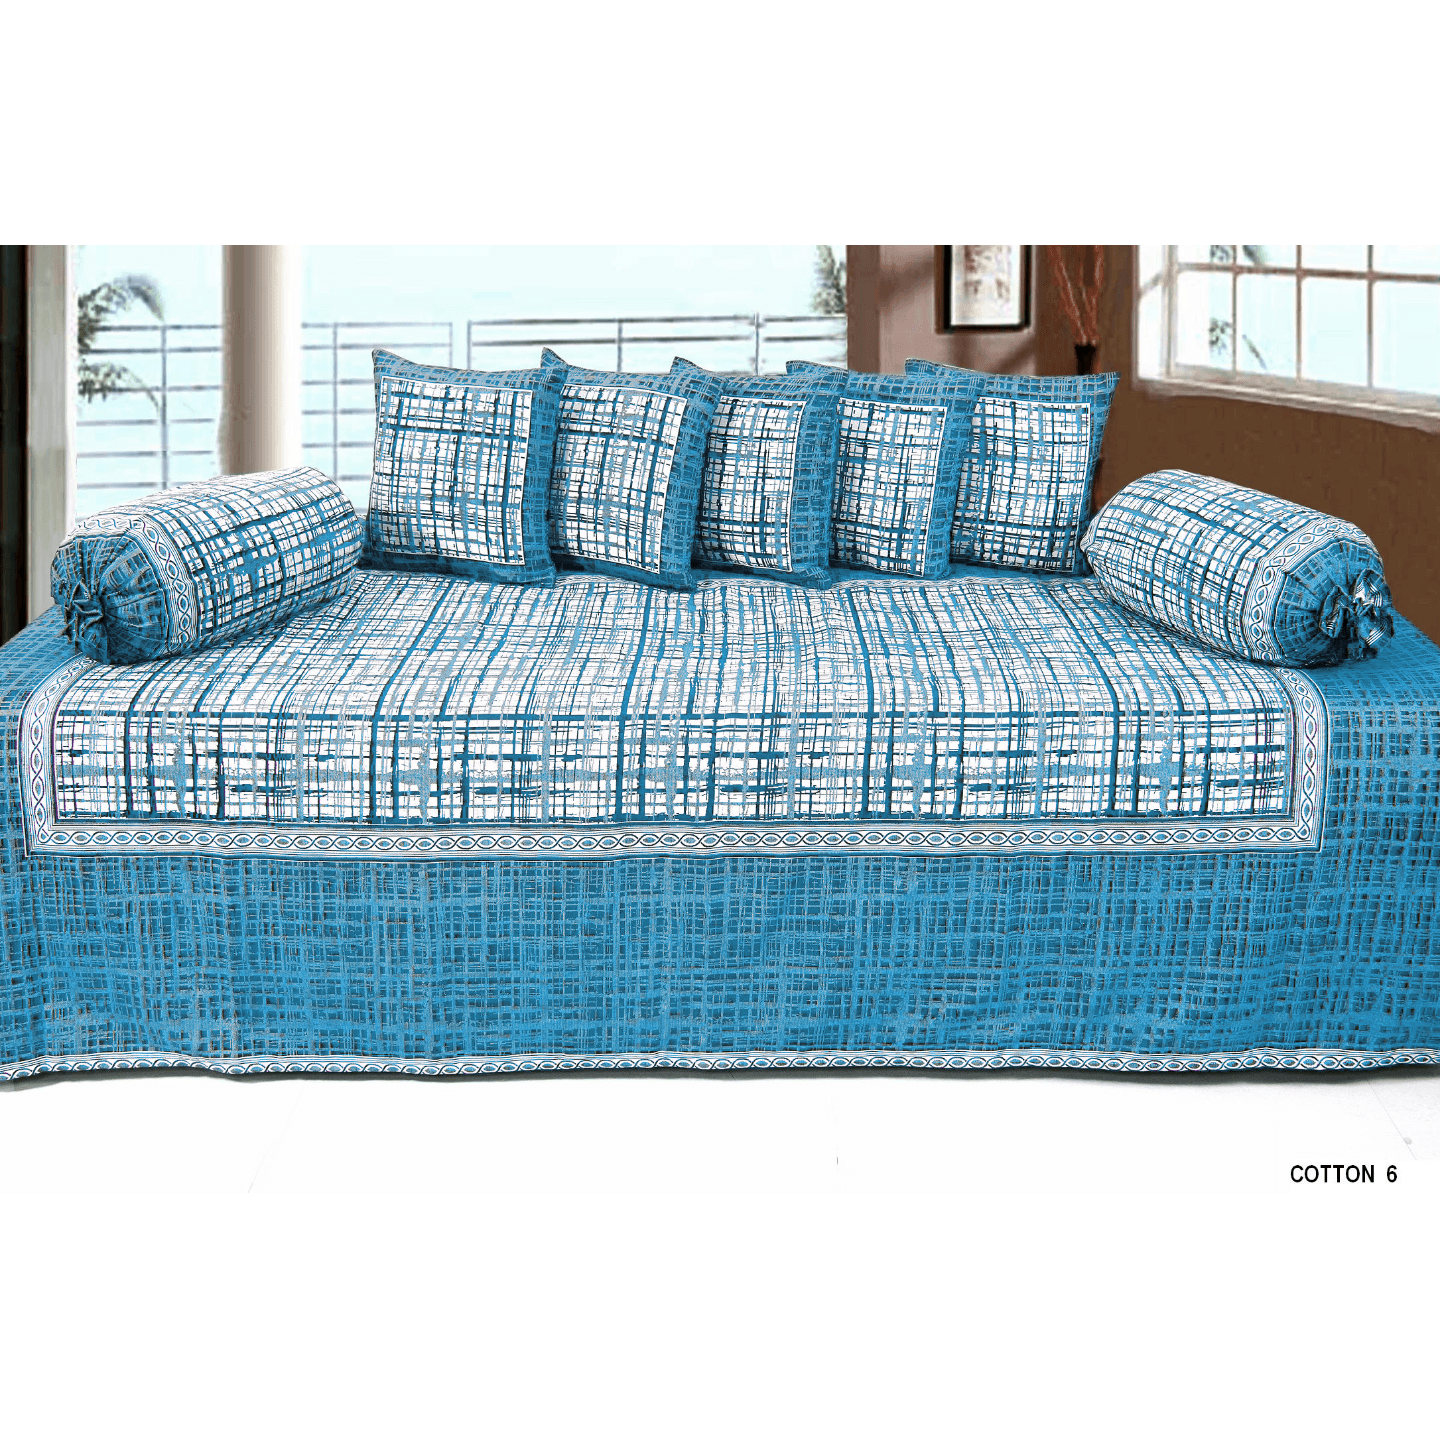 handtex home jacquard design cotton Diwan Set-8PC1 Single Bedsheet,2 Blosters & 5 Cushion Covers Firozi